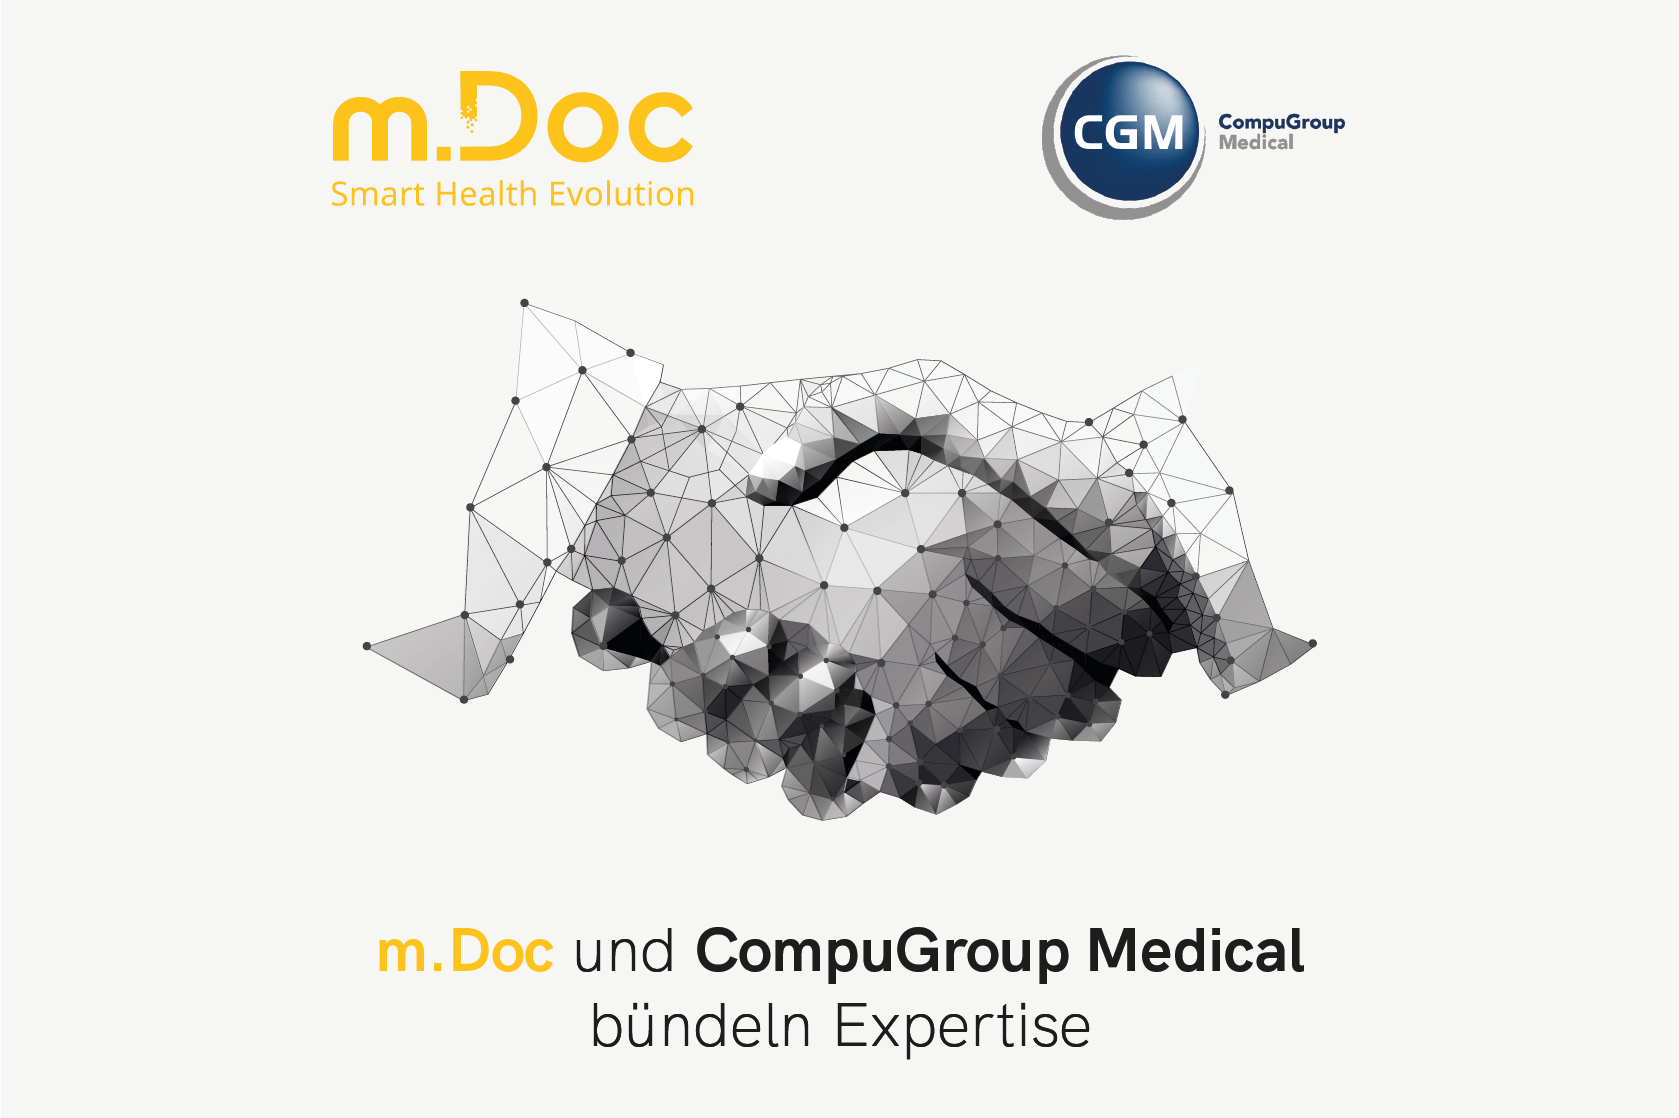 m.Doc und CompuGroup Medical bündeln Expertise